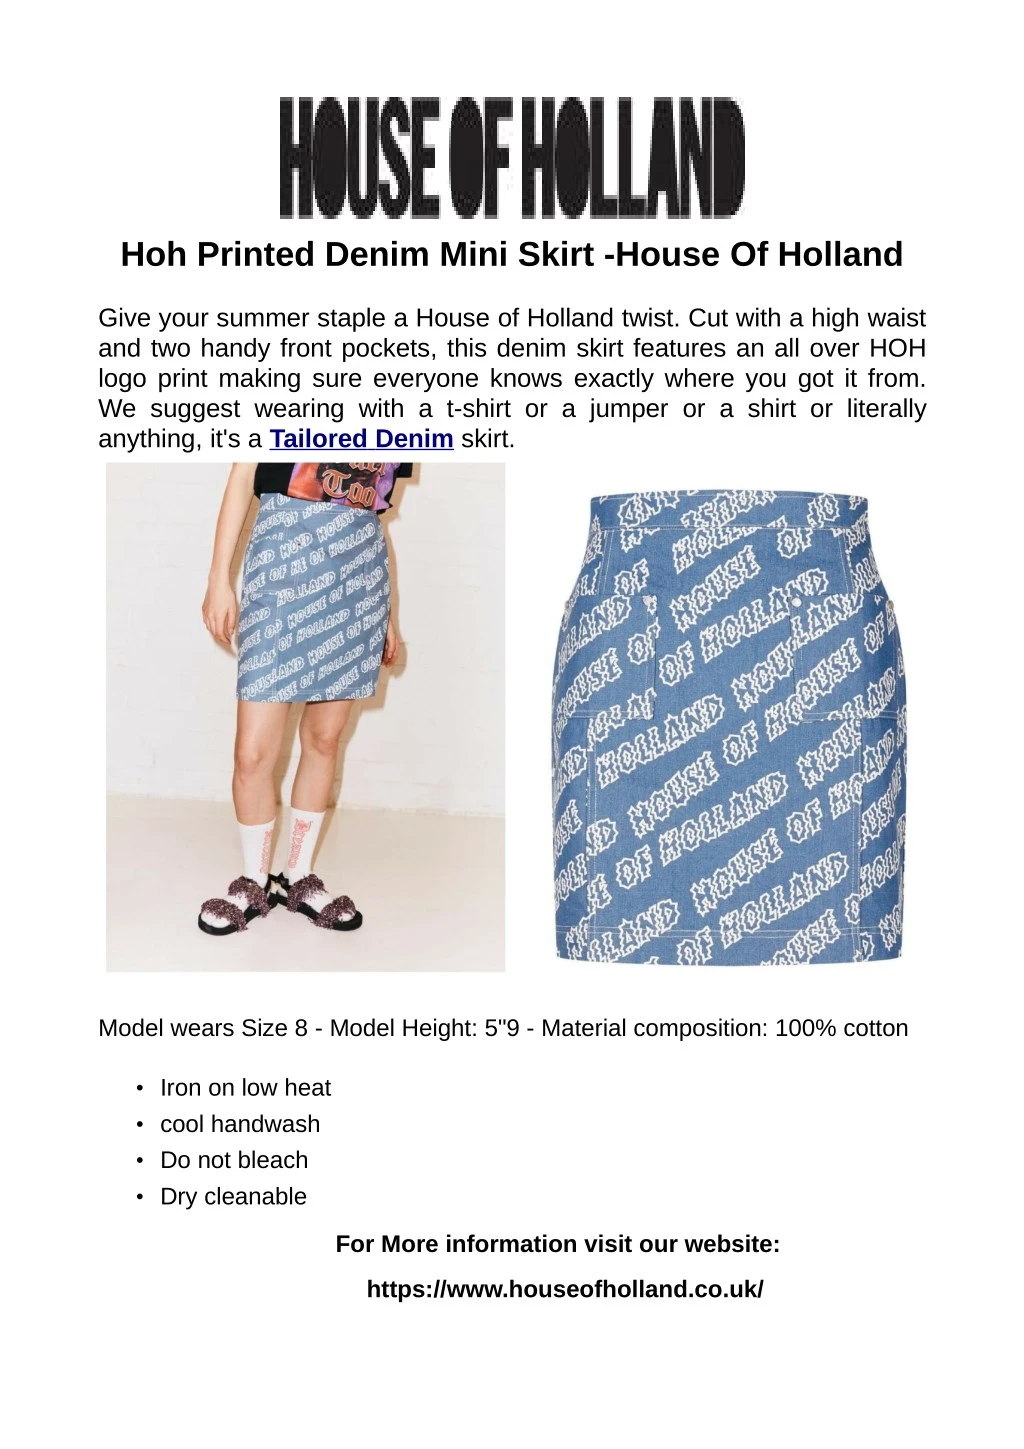 hoh printed denim mini skirt house of holland